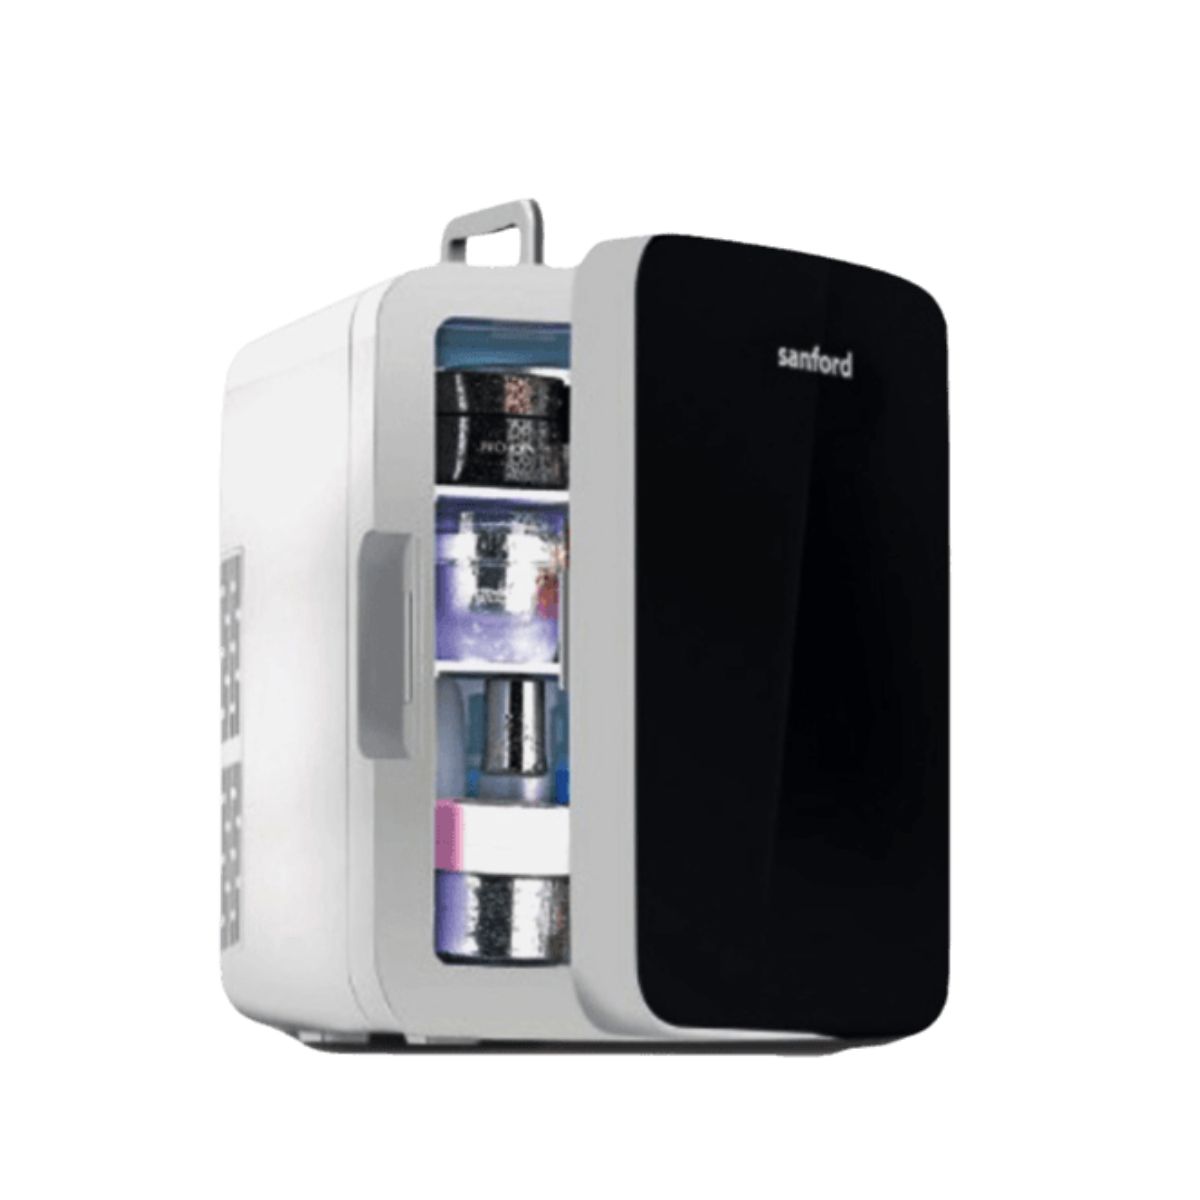 Sanford Mini Refrigerator - 2in1 Cool And Warm - SF1715MRF - 10L - Black & White